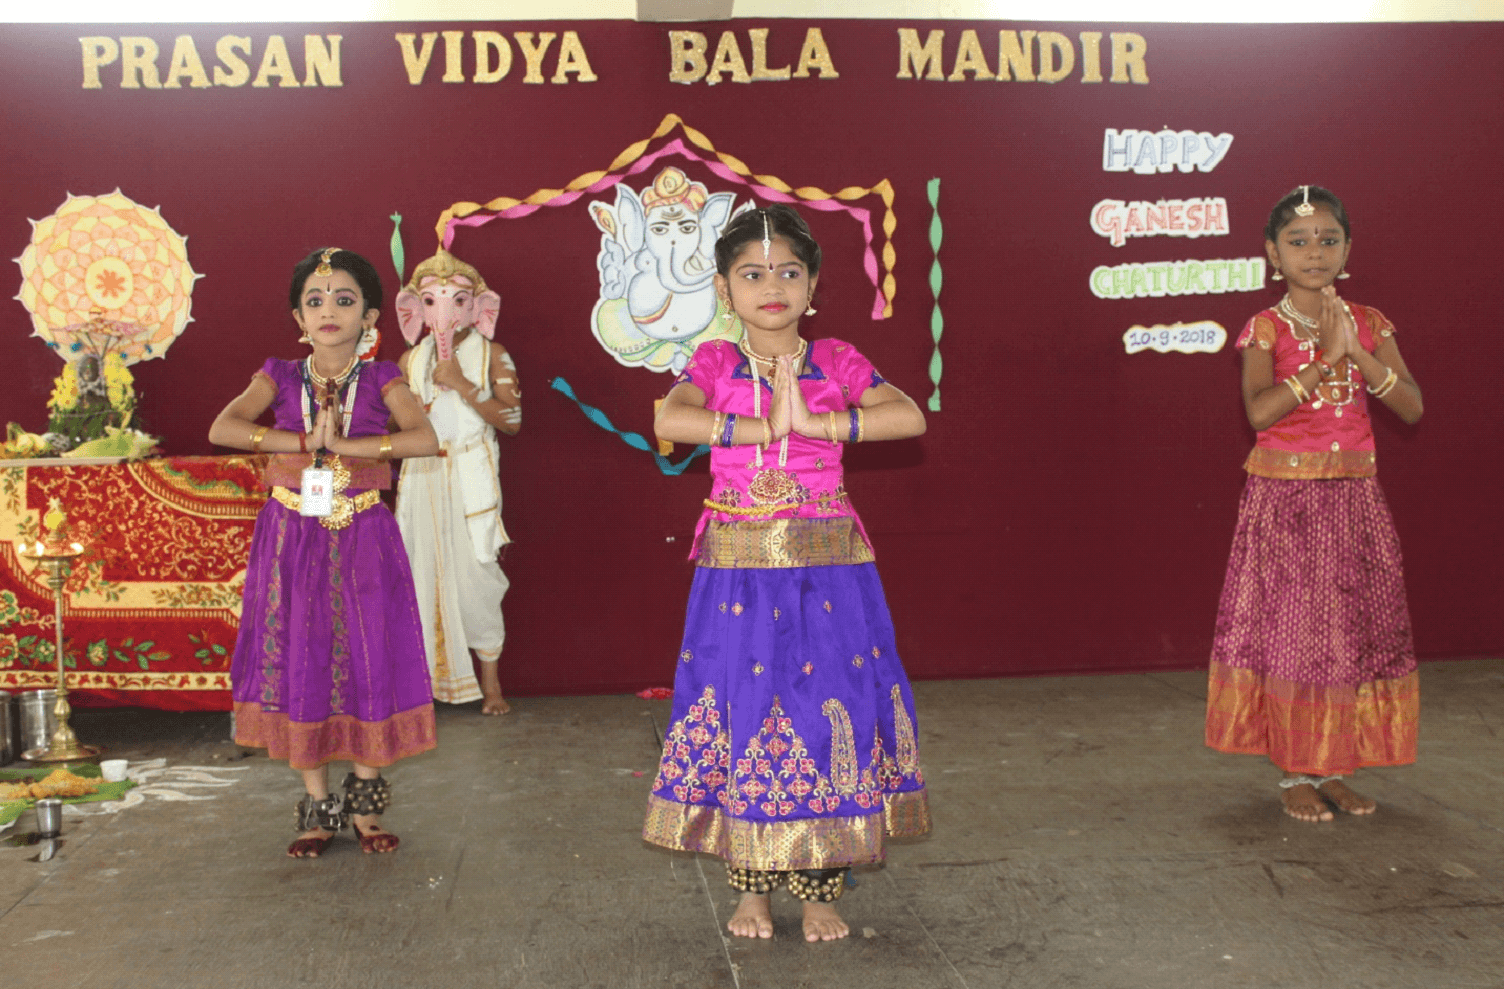 Praising the Lord Ganesha through graceful movement of charming kids